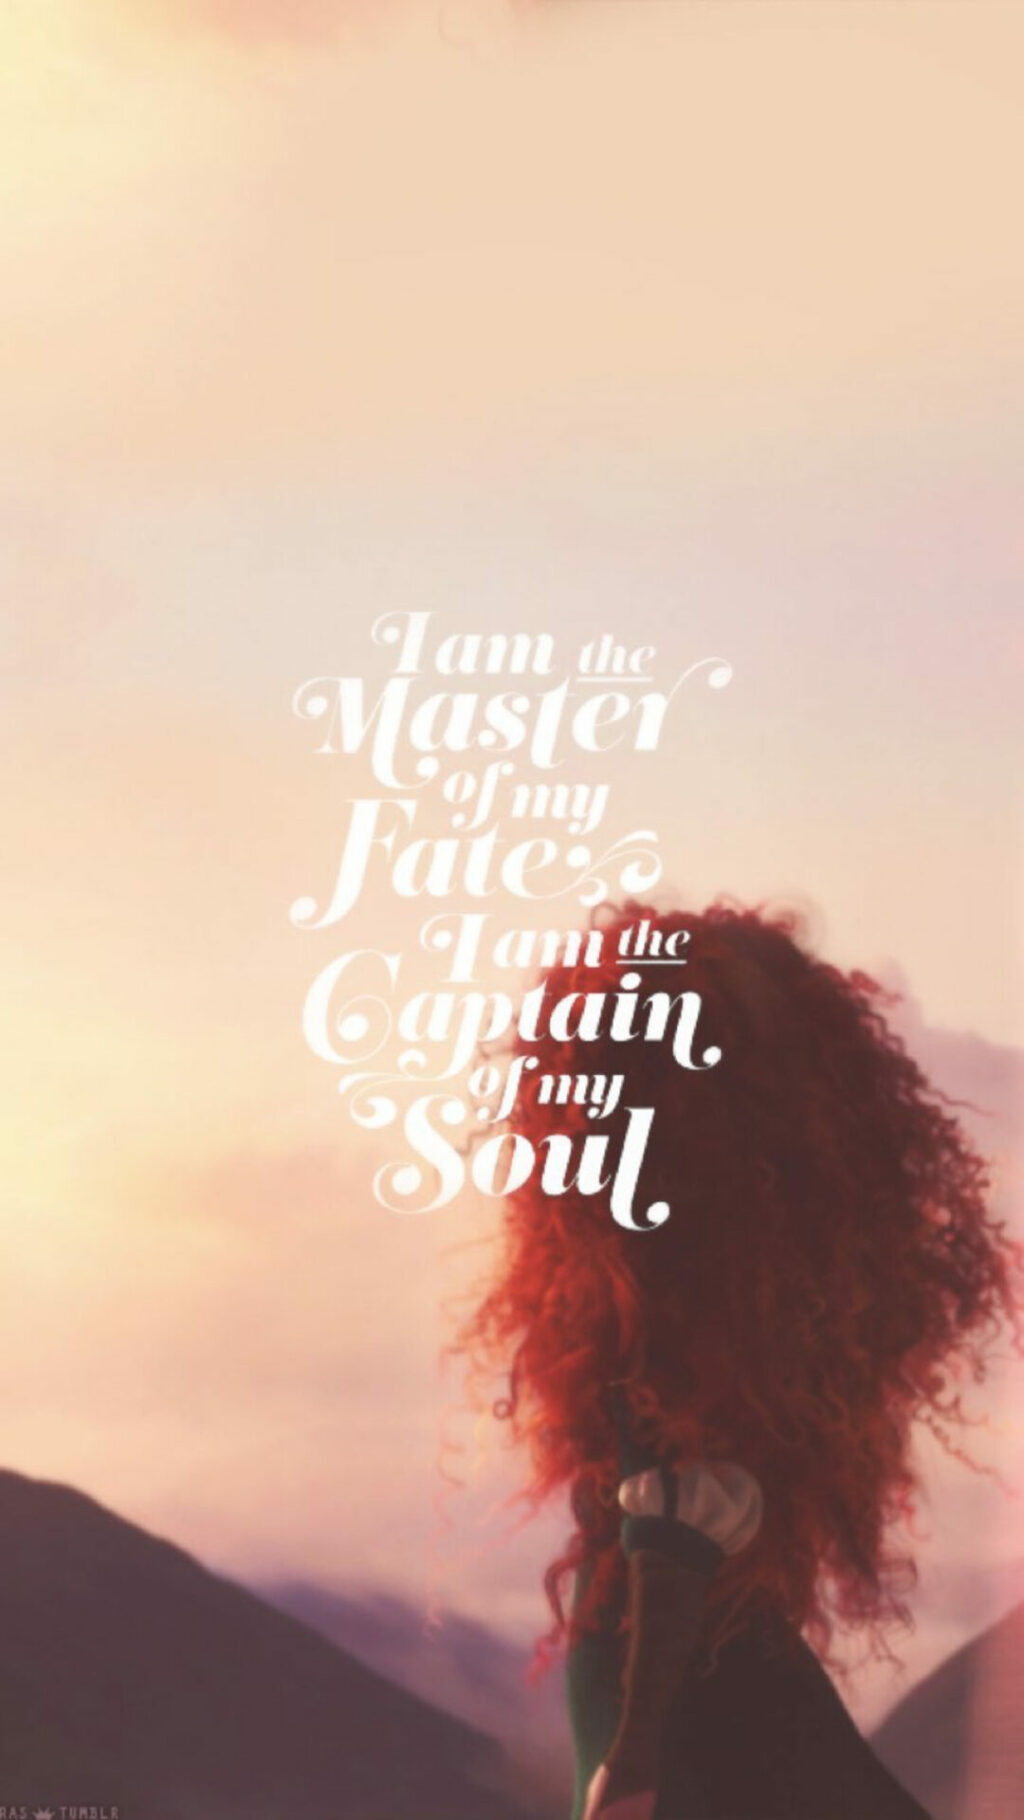 Wallpaper de celular - I am the master of my fate, I am the captain of my soul